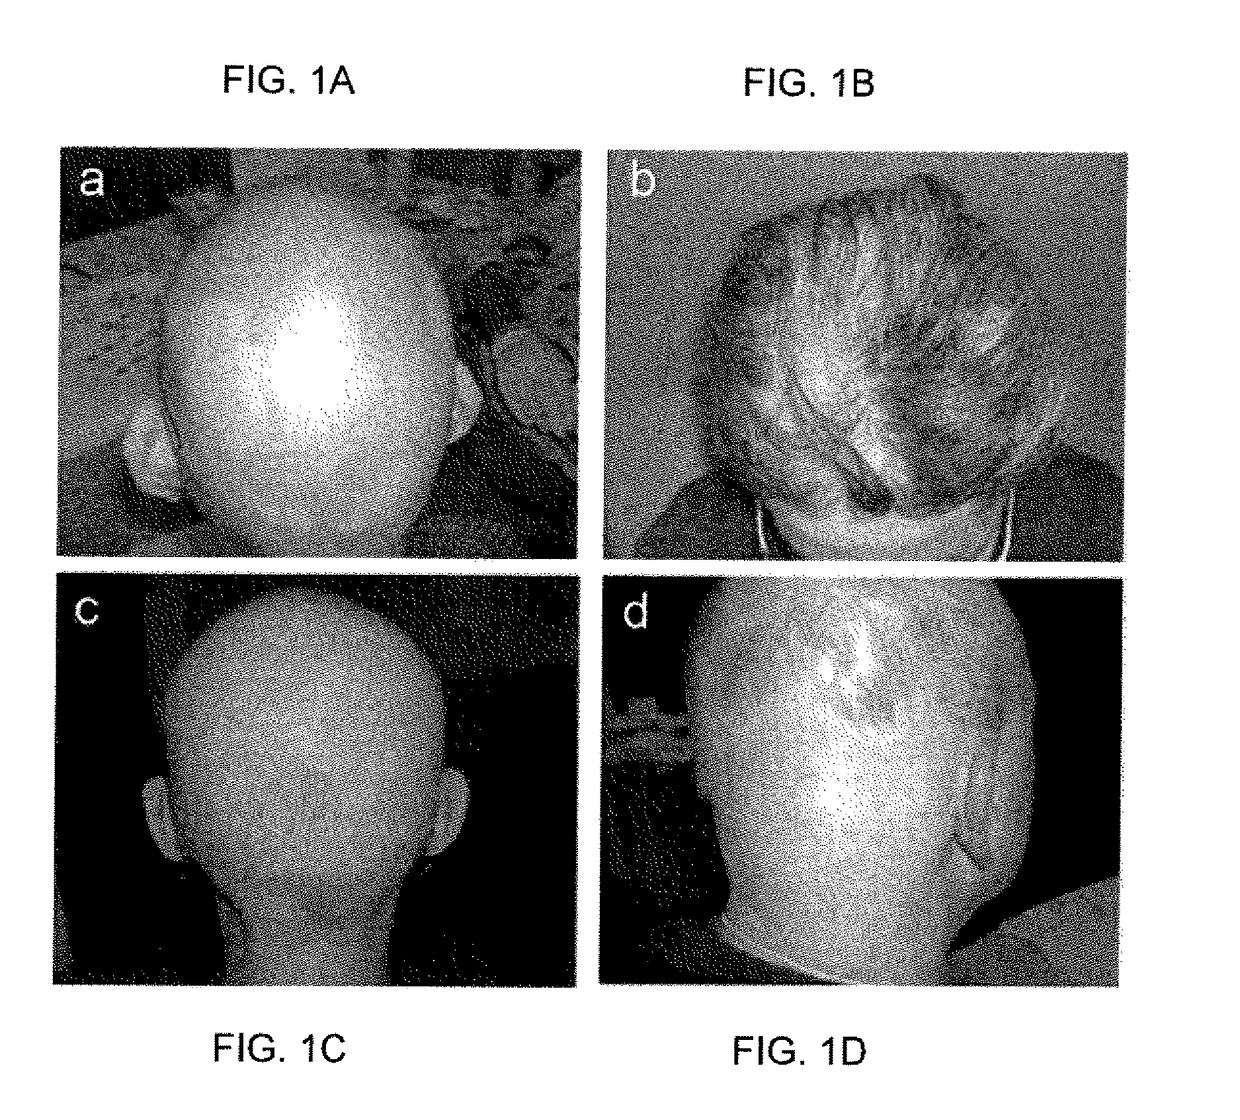 Methods for treating hair loss disorders